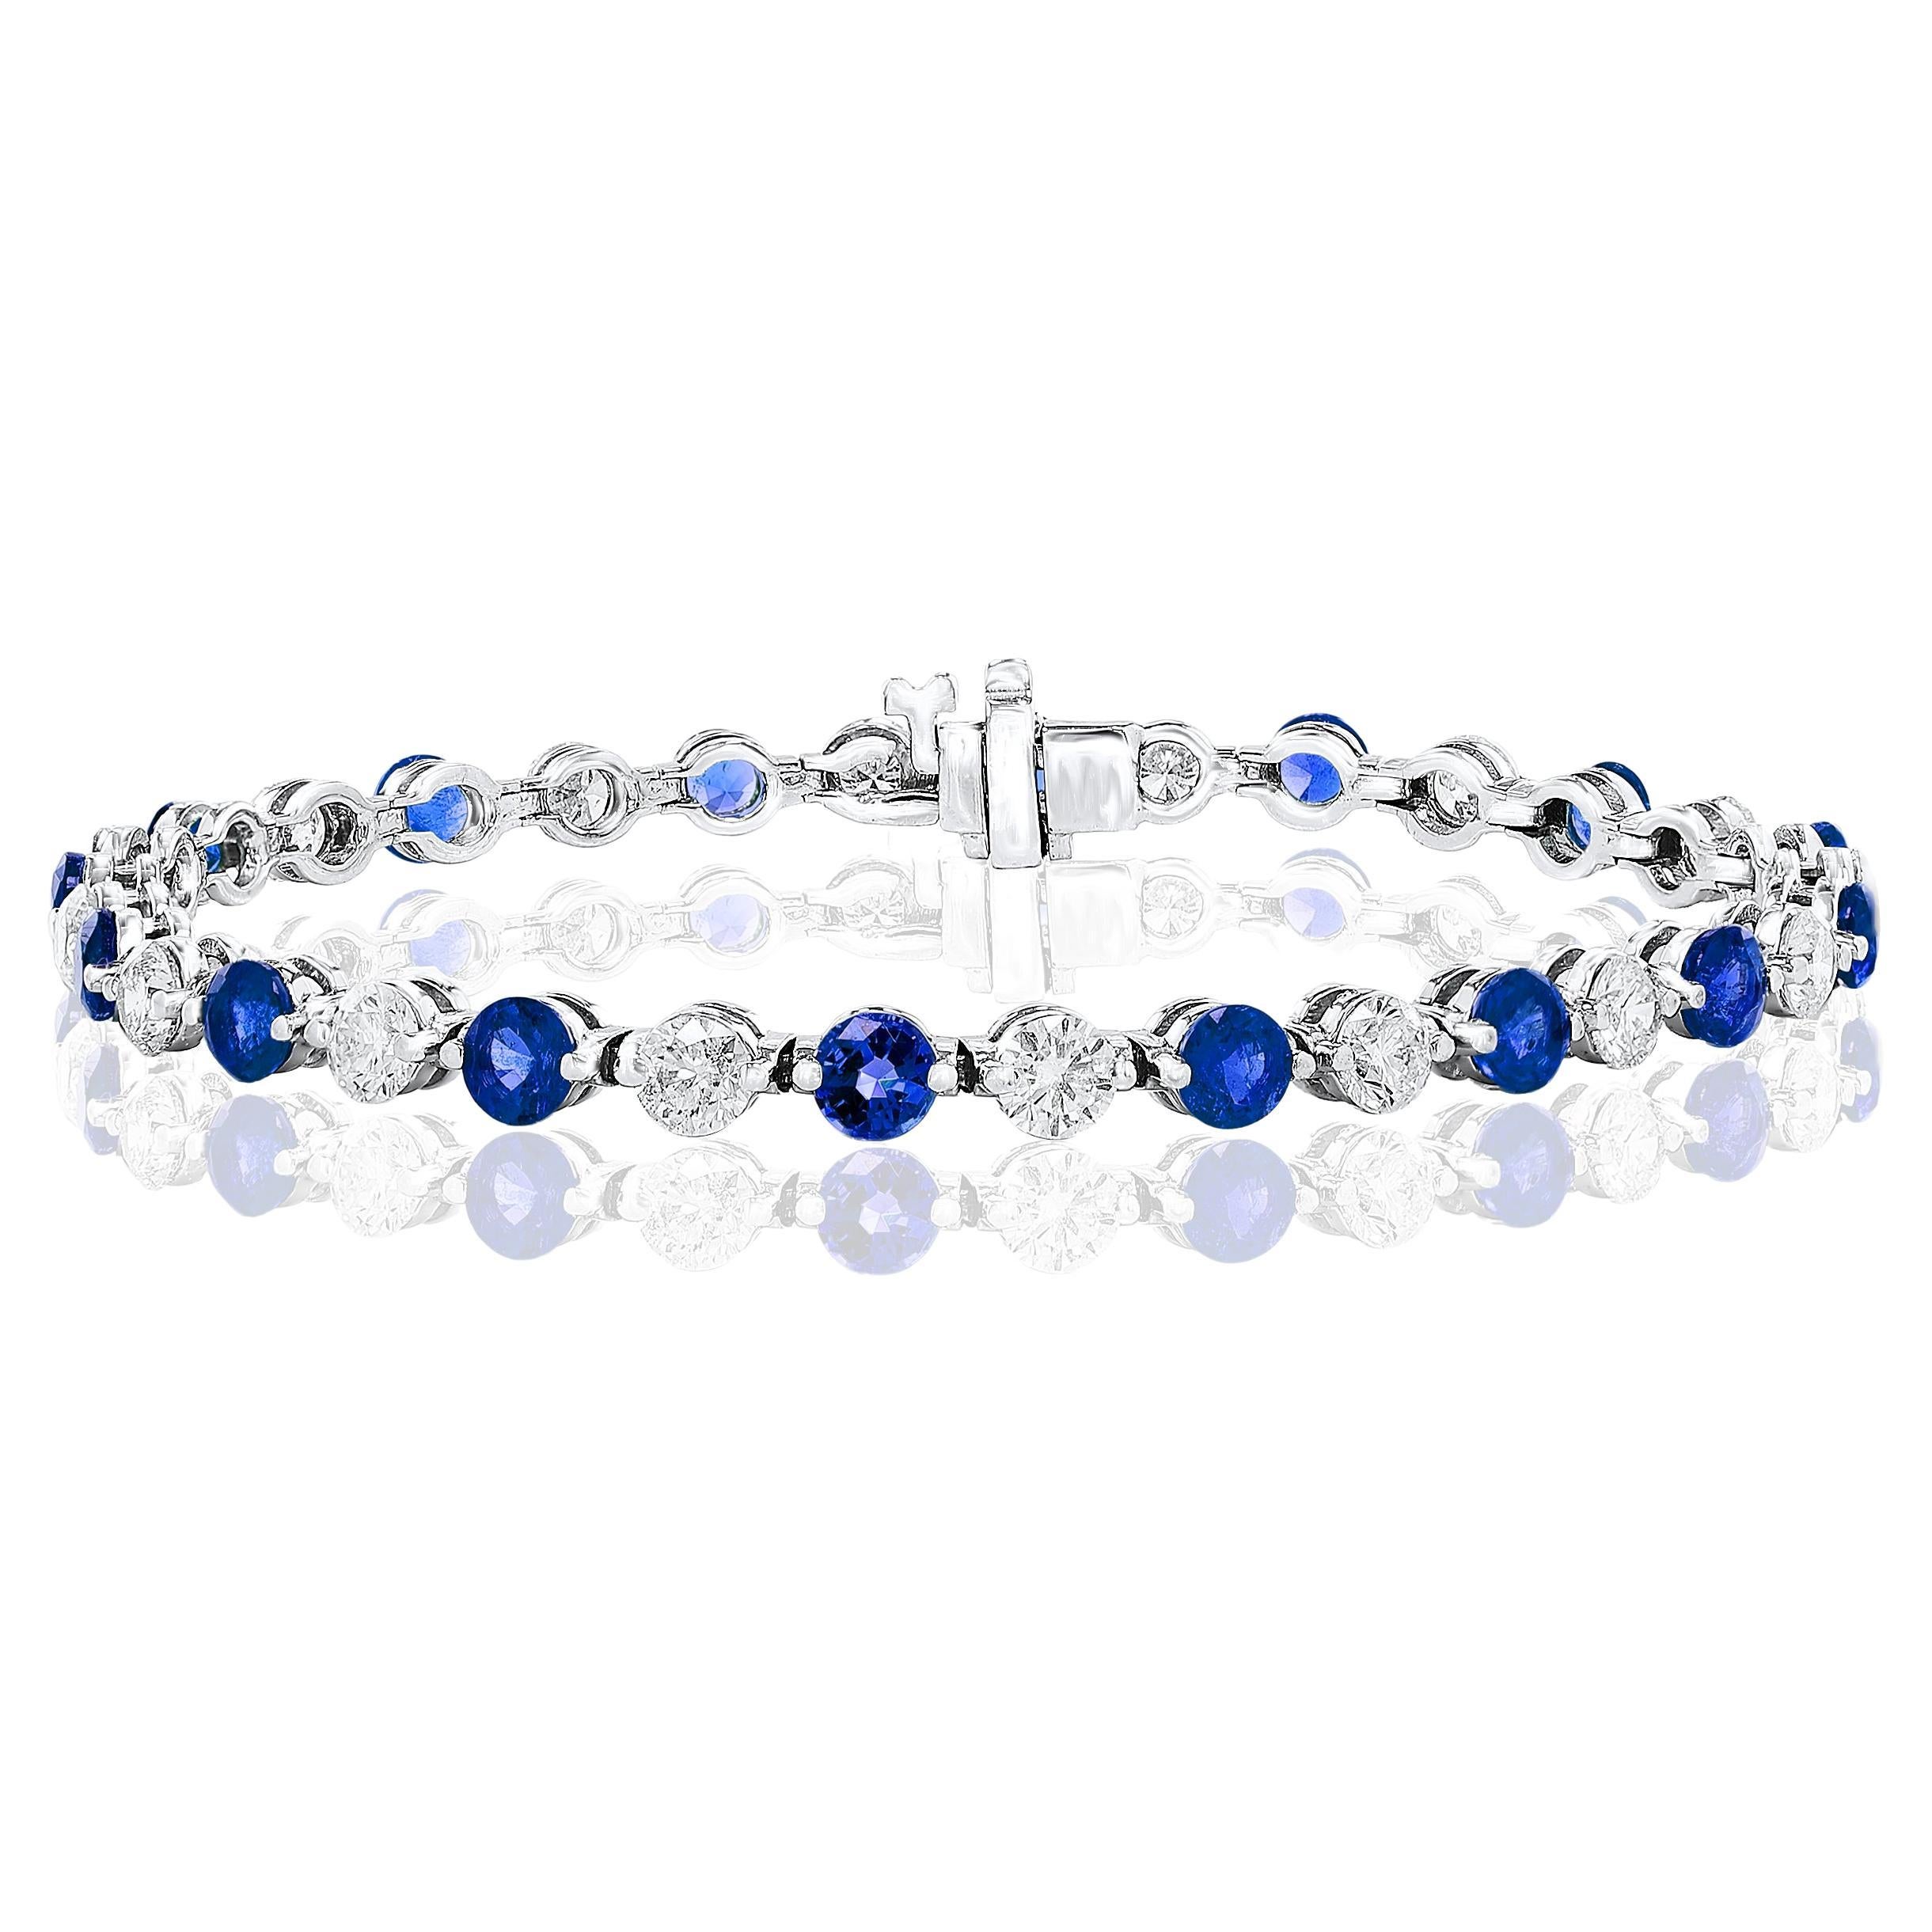 4.10 Carat Round Blue Sapphire and Diamond Bracelet in 14K White Gold